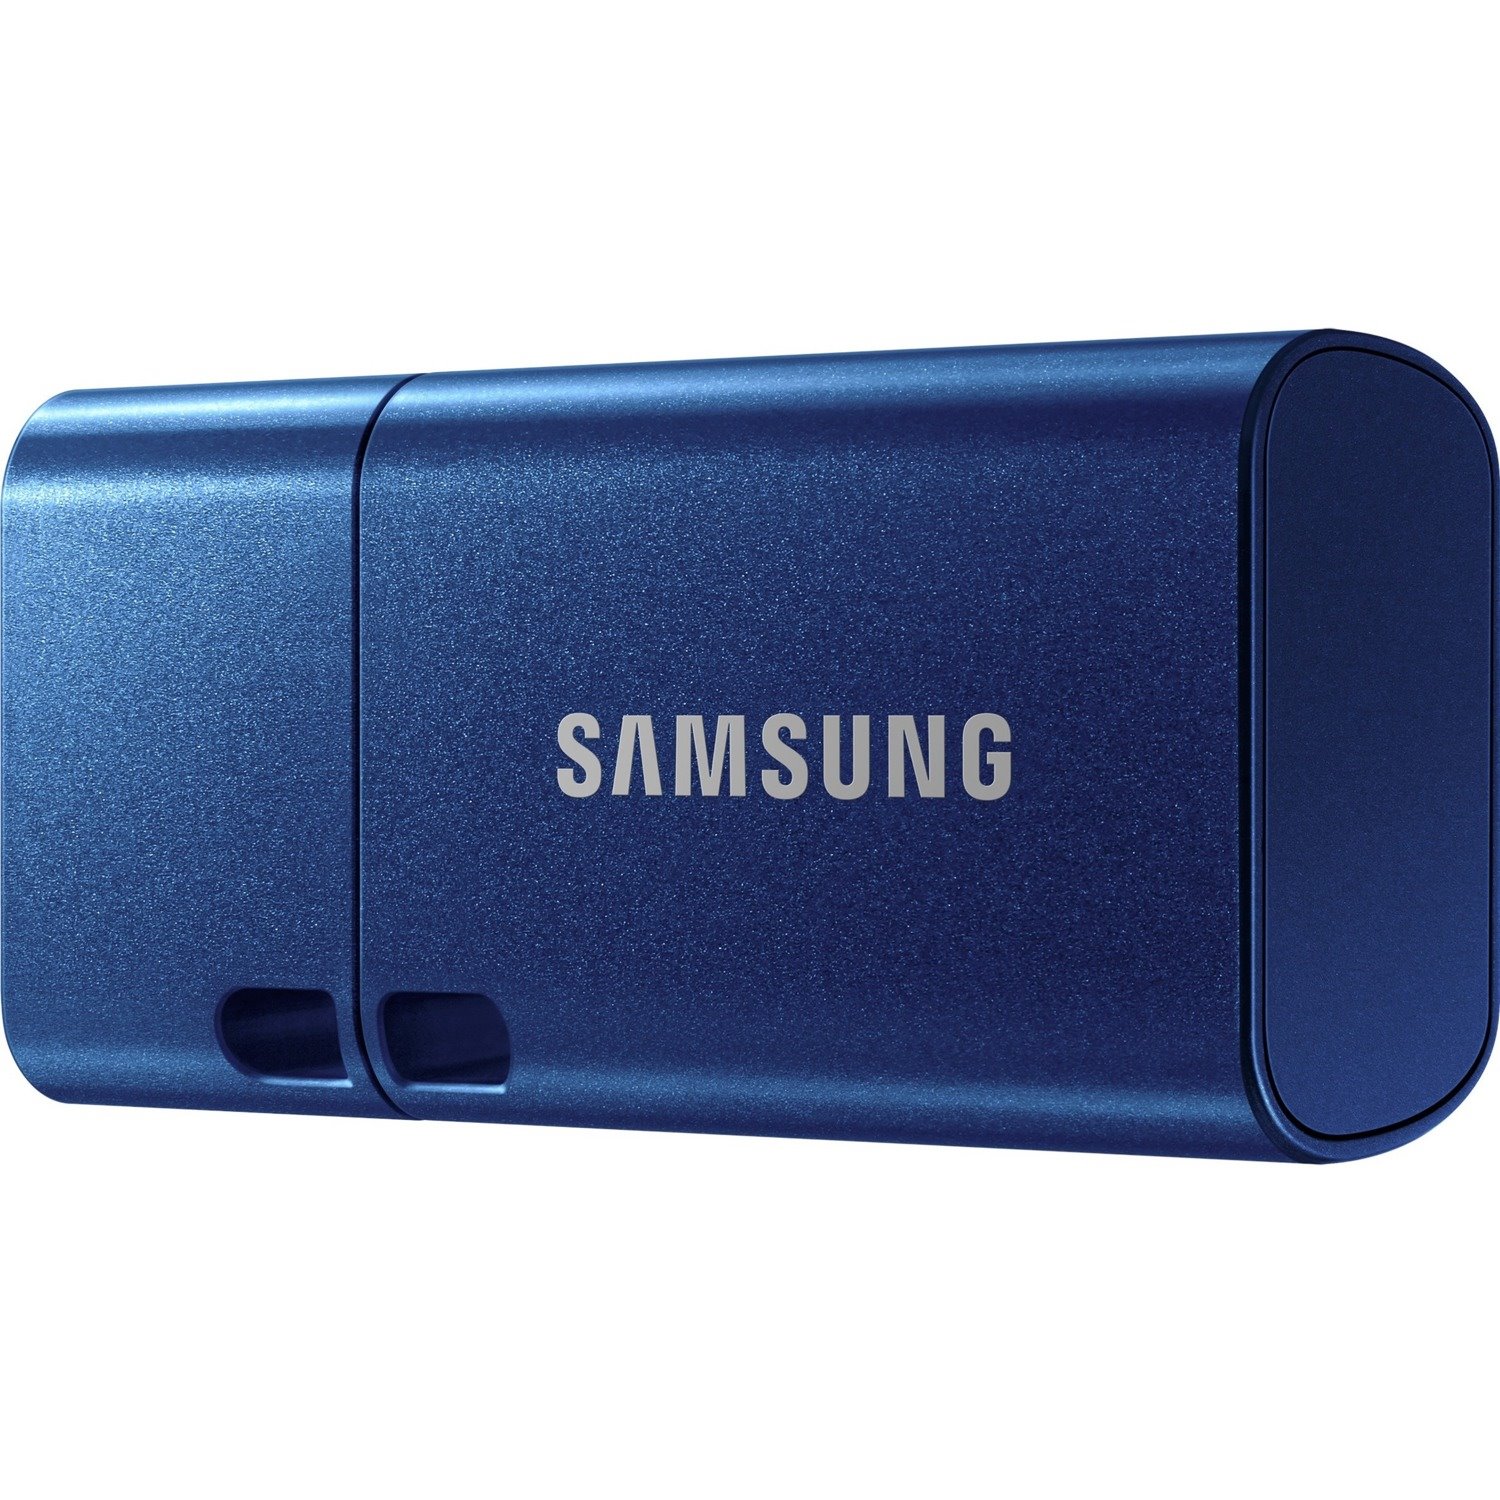 Samsung MUF-256DA 256 GB USB 3.2 (Gen 1) Type C Flash Drive - Blue